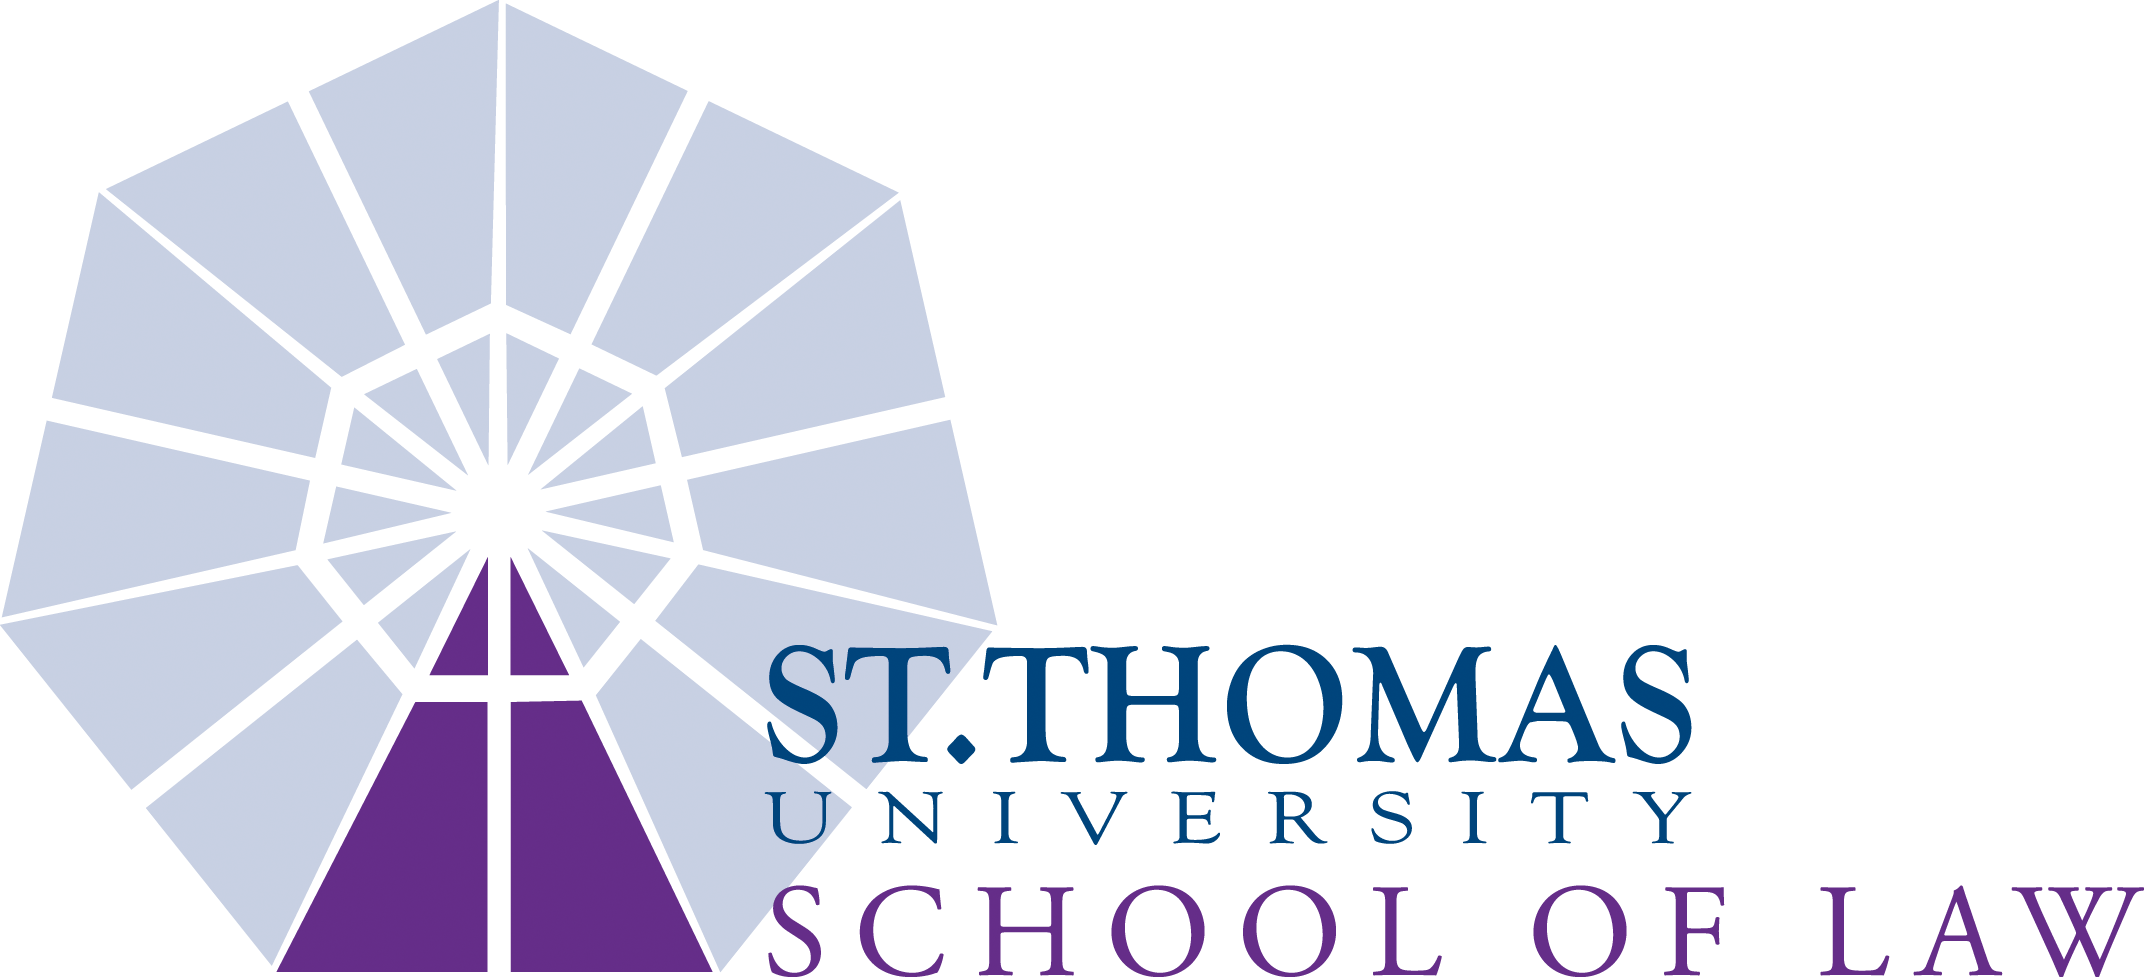 University of St. Thomas School of Law